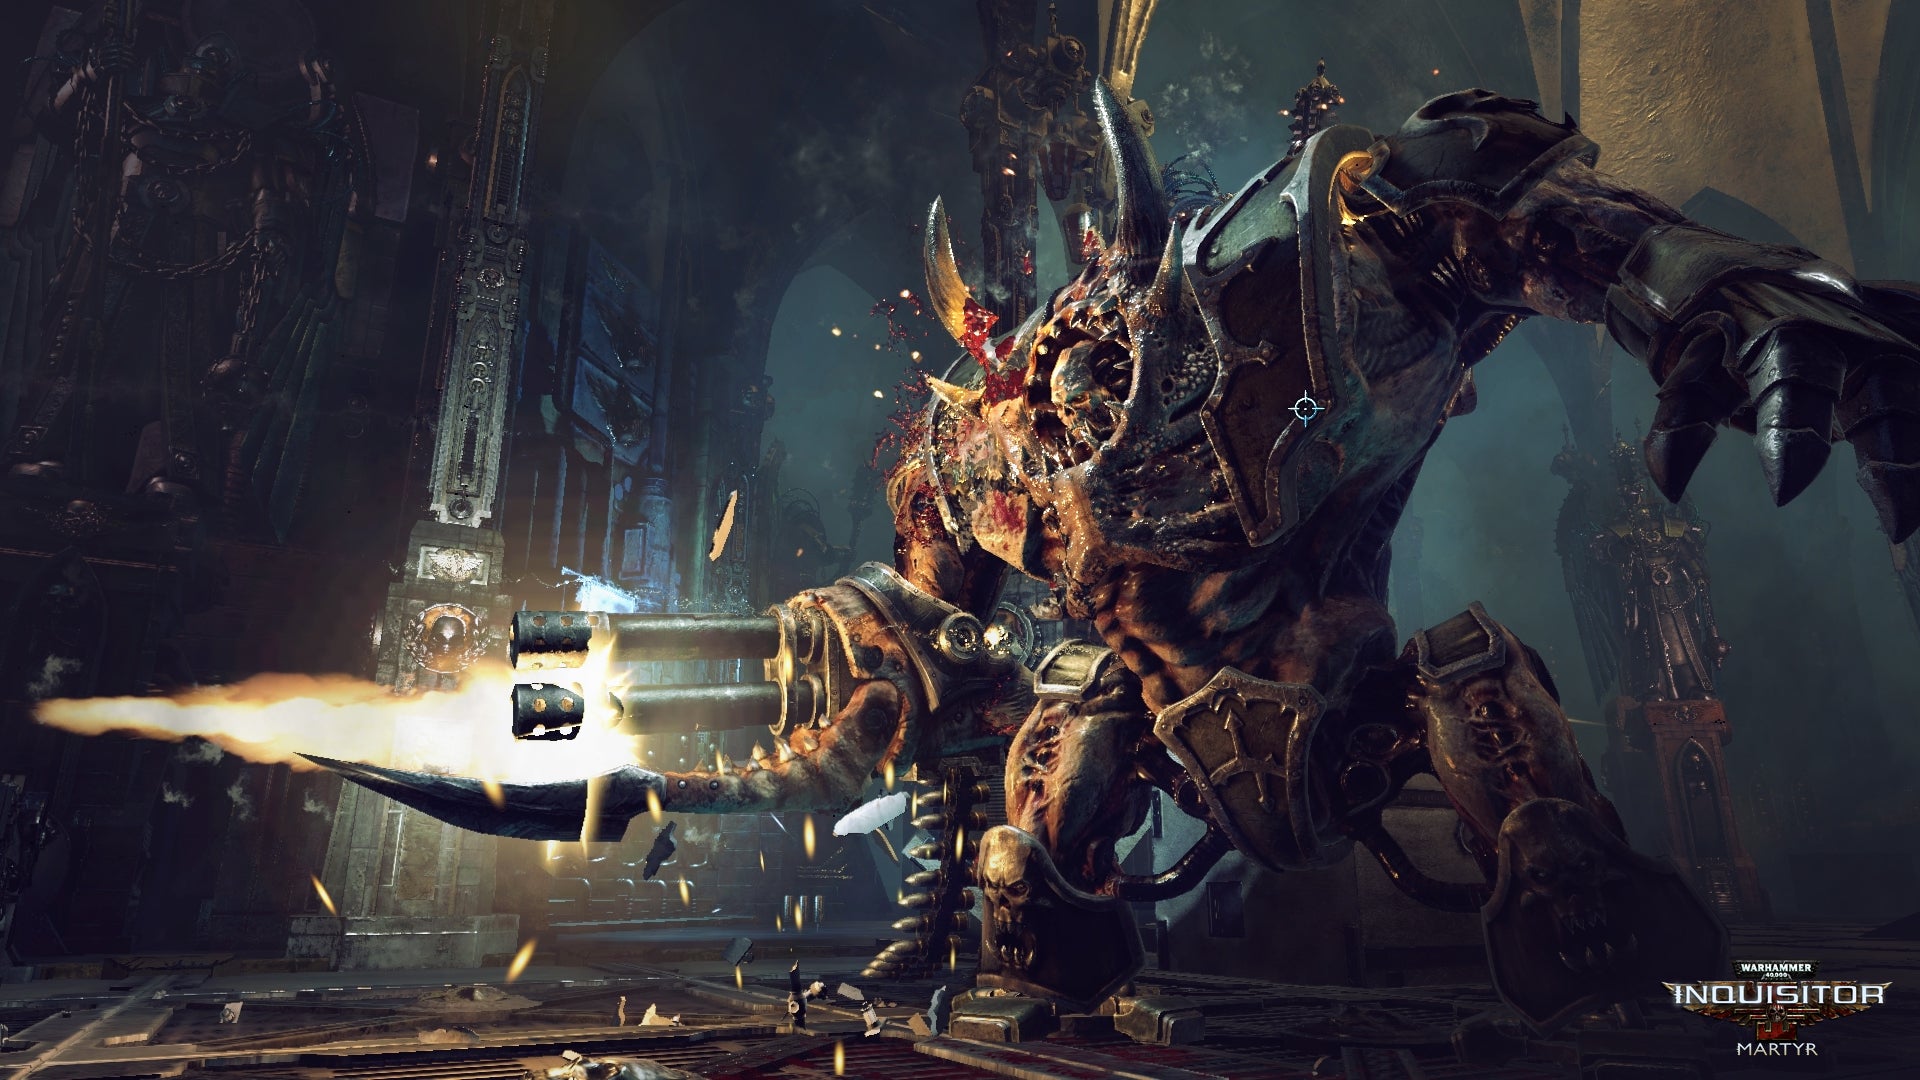 Obrazki dla Warhammer 40,000: Inquisitor - Martyr dostępne na Steamie